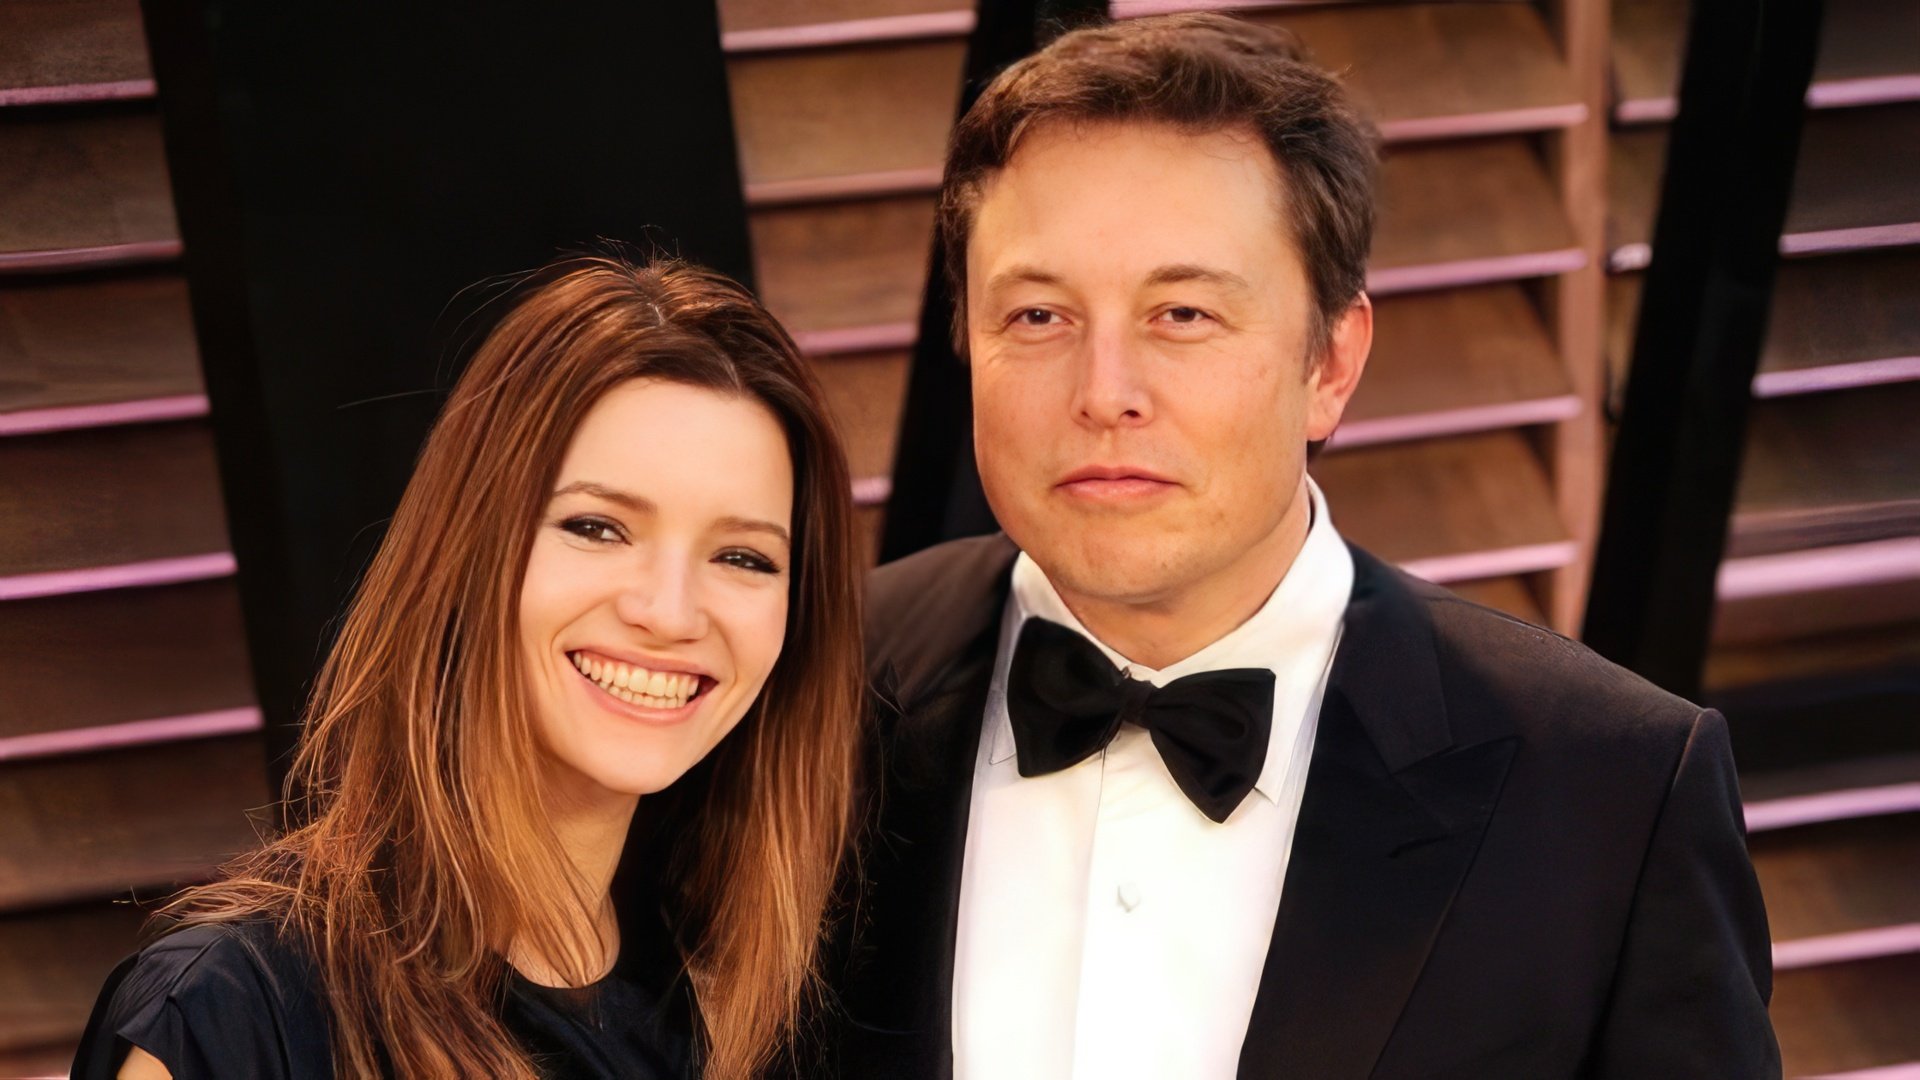 Elon Musk’s second wife, Talulah Riley